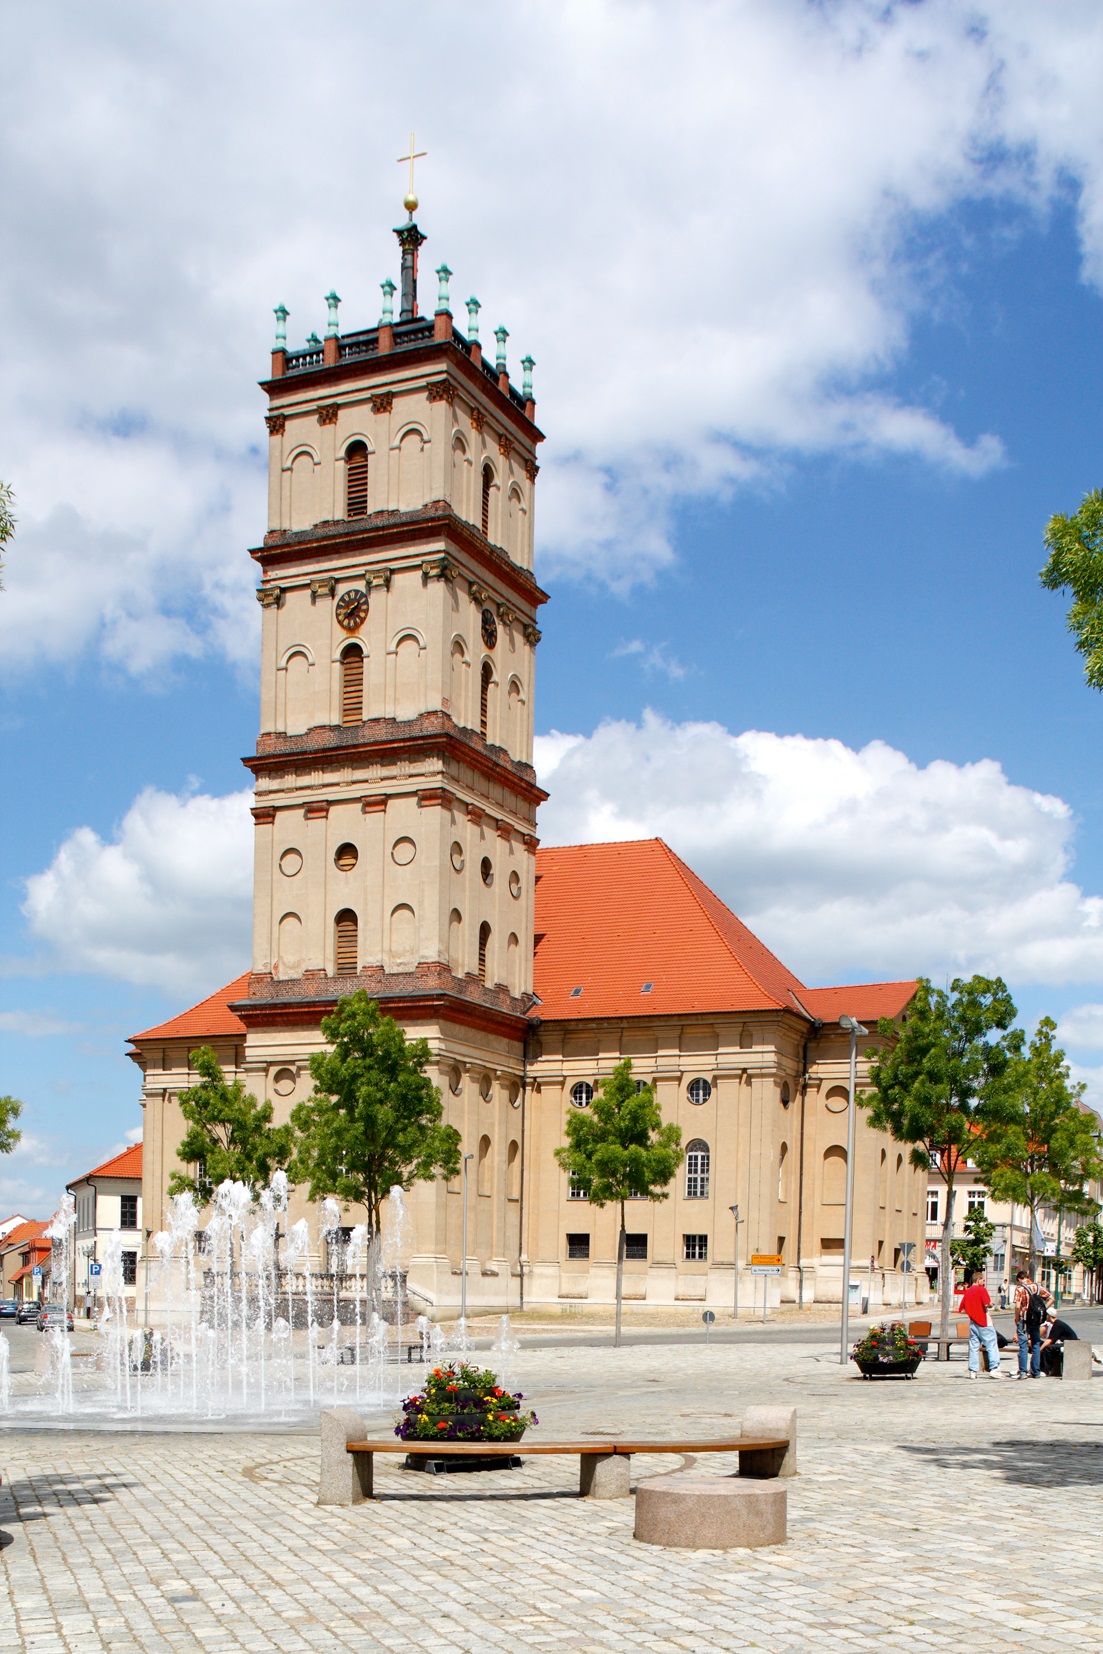 Stadtkirche Neustrelitz.
